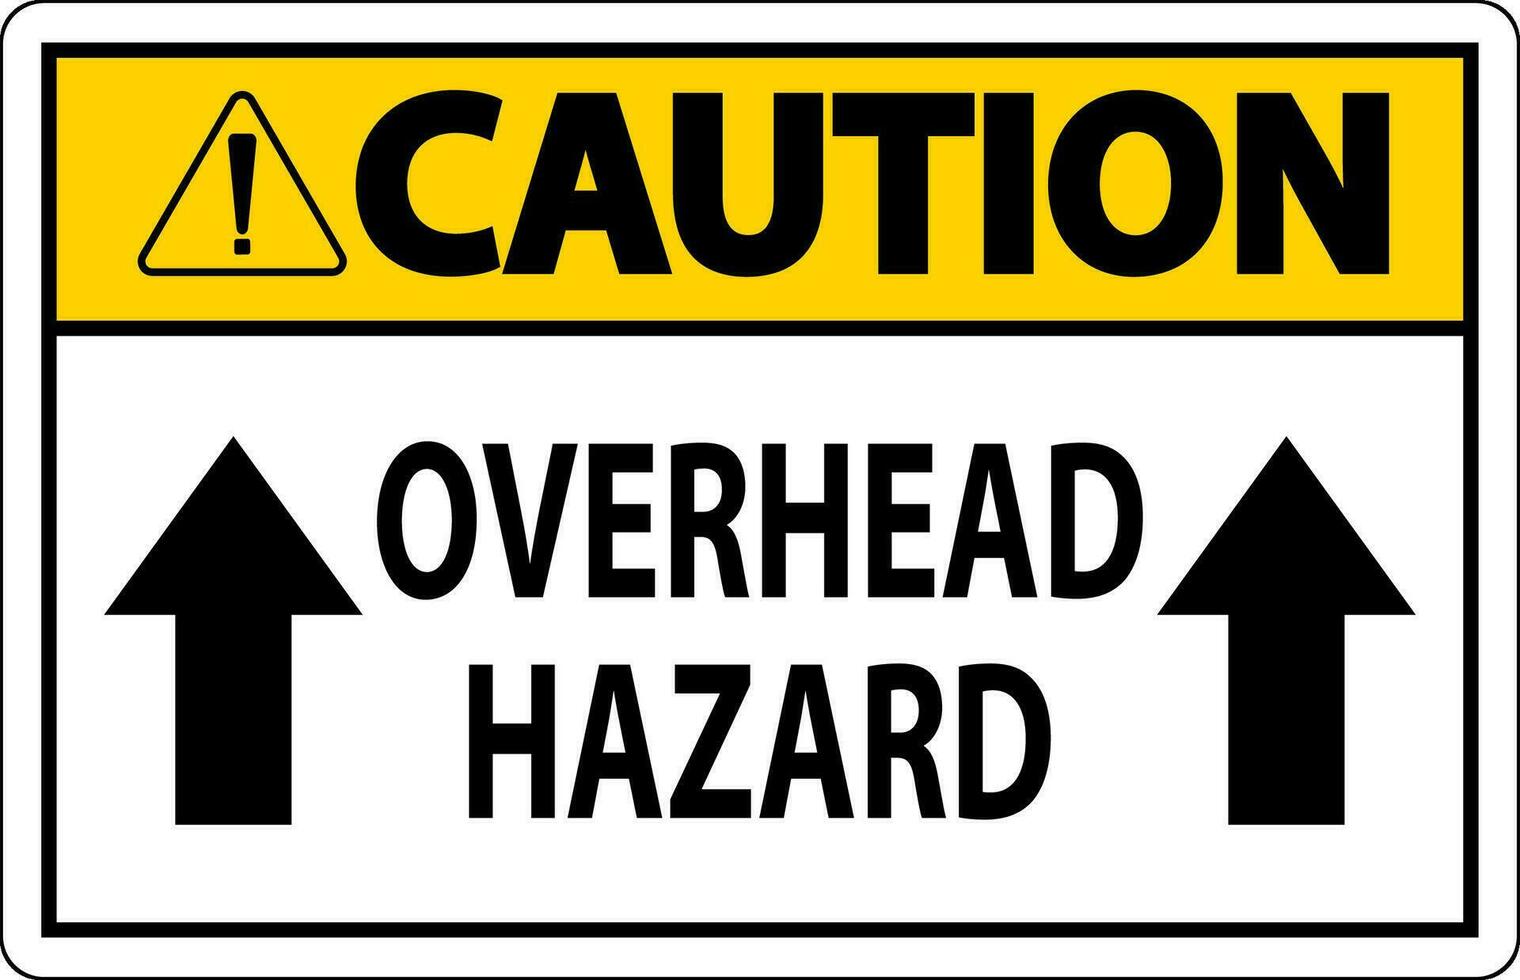 Caution Sign Overhead Hazard vector